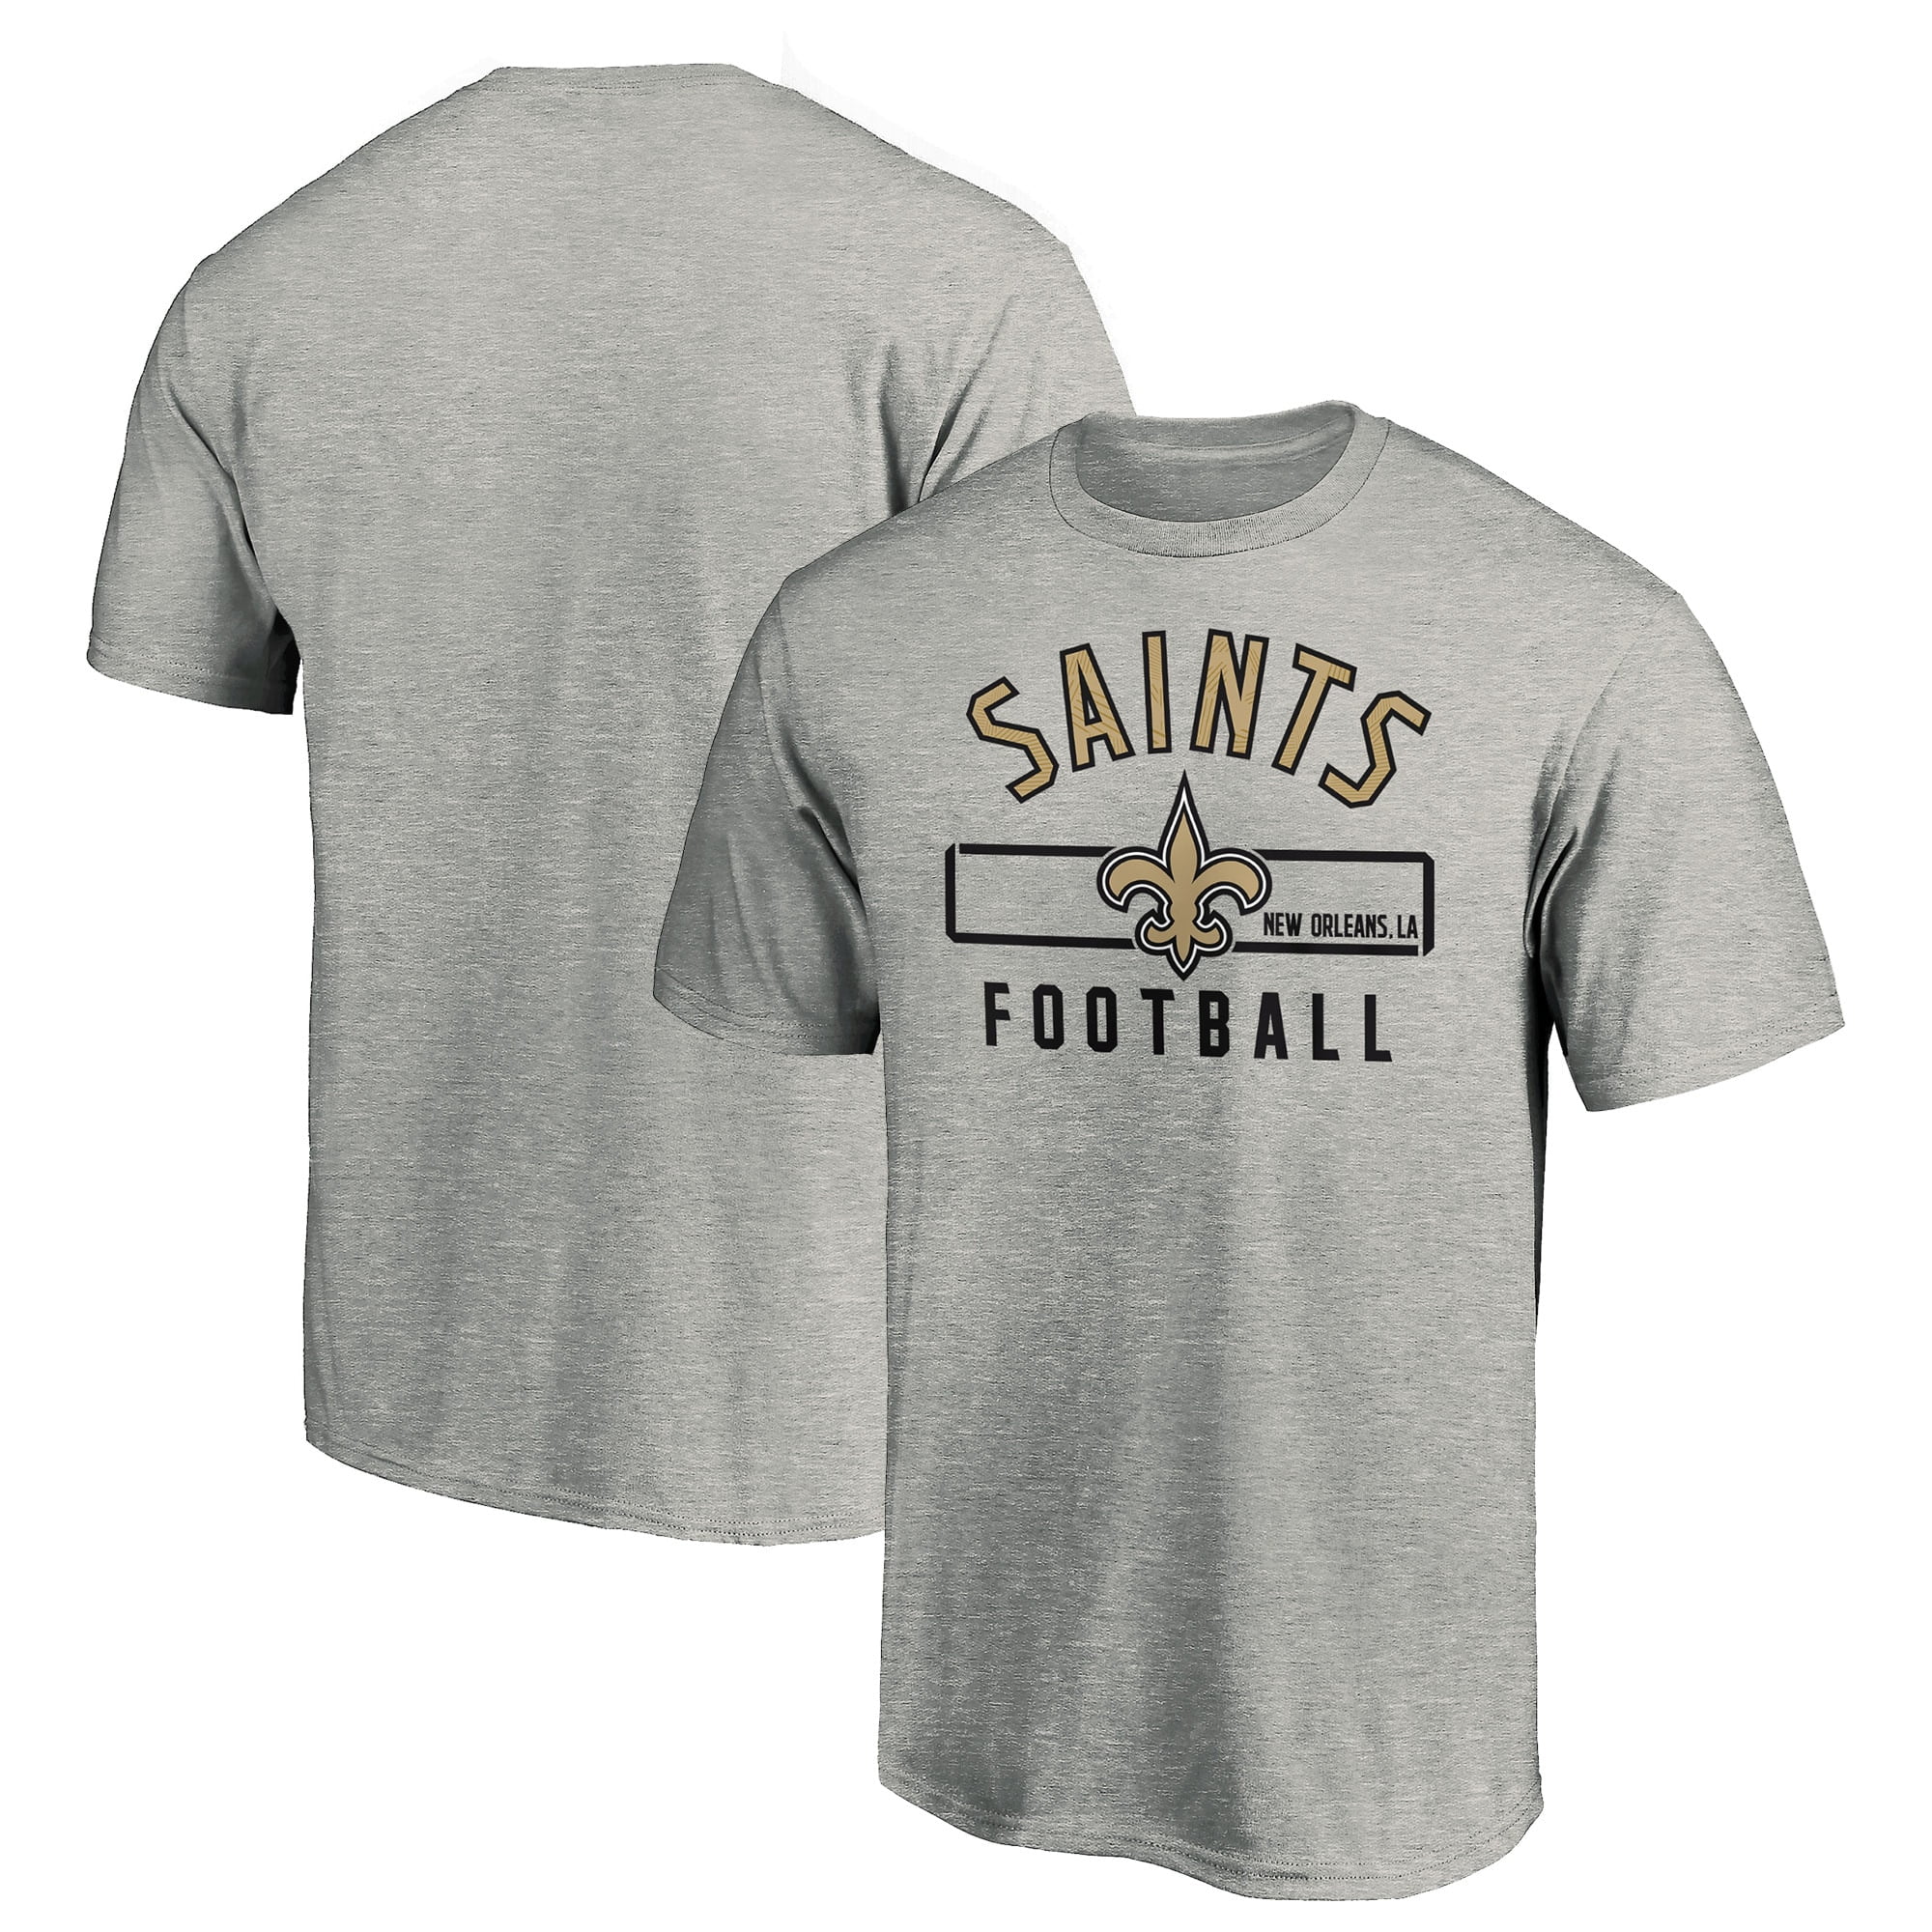 3xl saints shirts